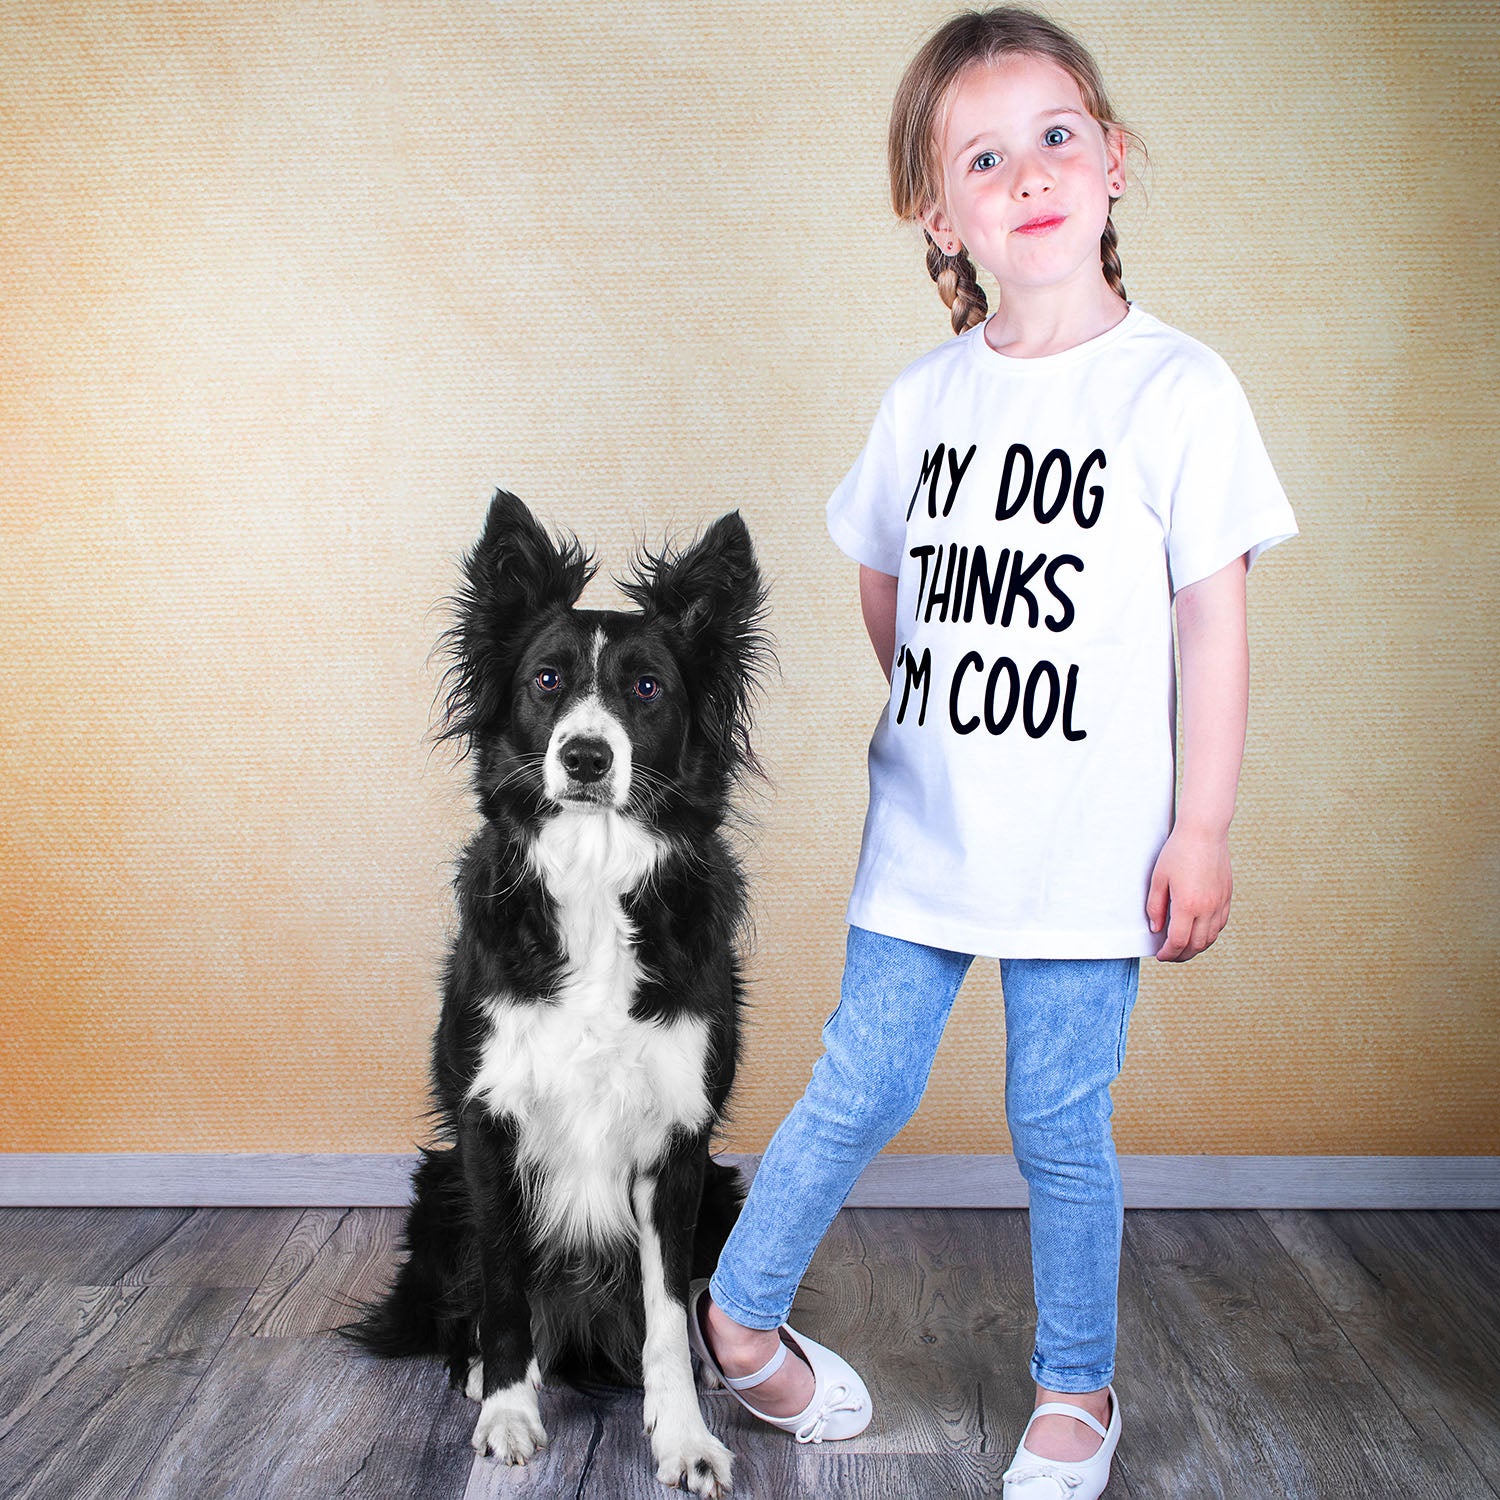 'My dog thinks I'm cool' kids shortsleeve shirt